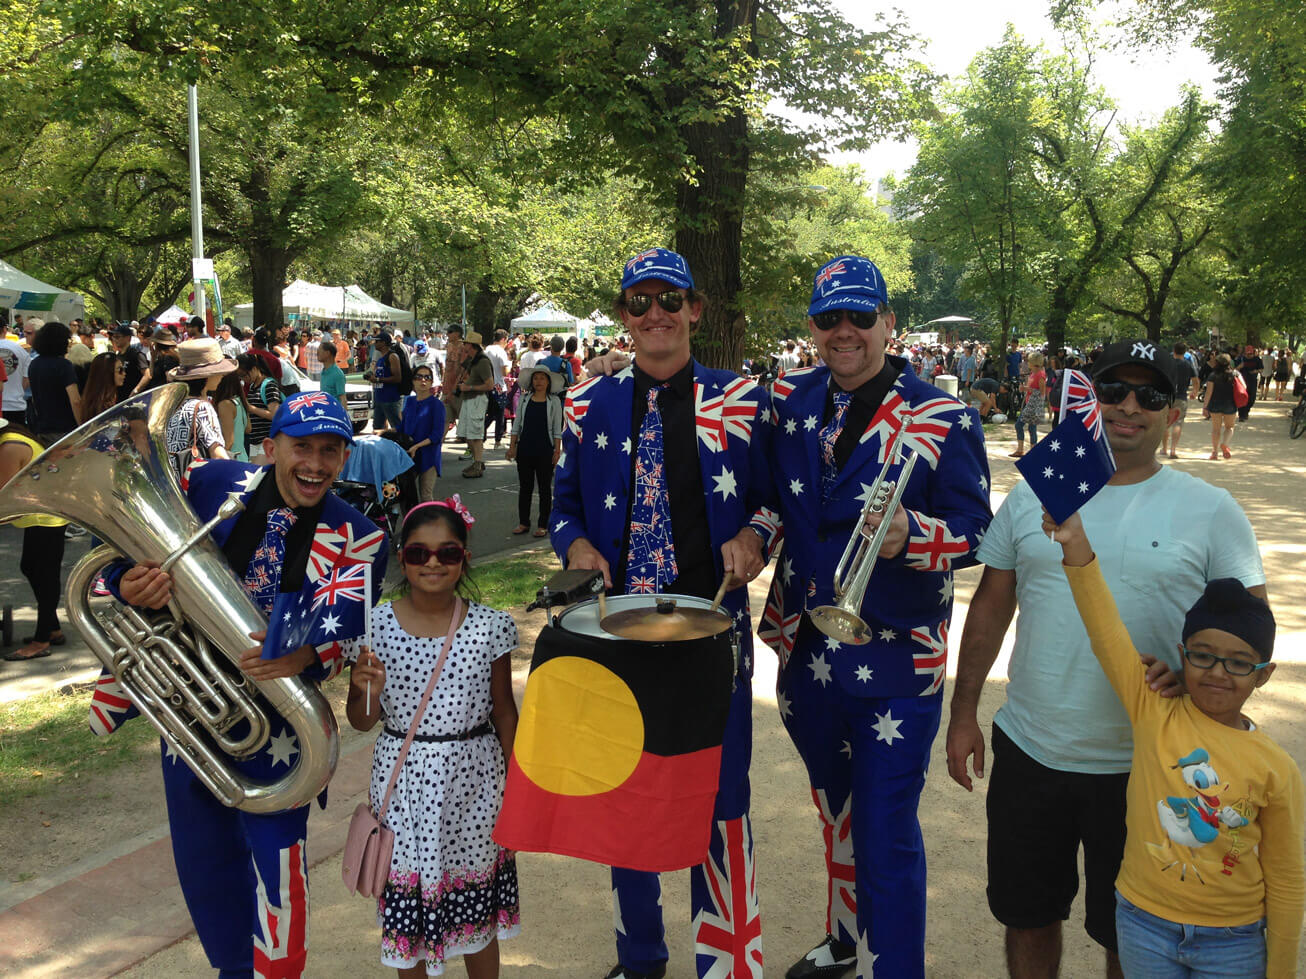 Ausie Flag Suit Band